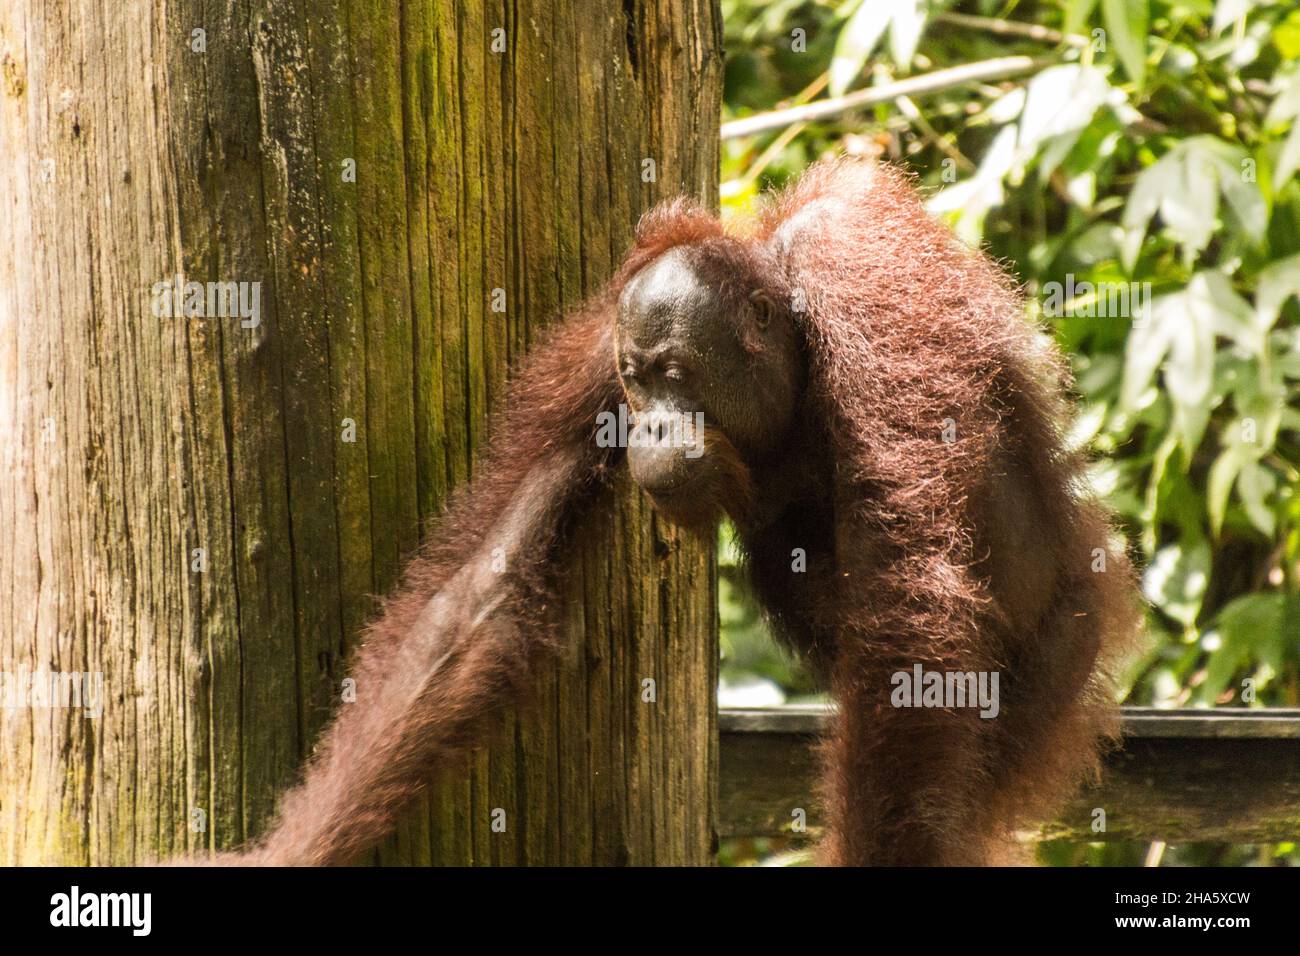 Bornean orangutan Pongo pygmaeus in Sepilok Orangutan Rehabilitation Centre, Borneo island, Malaysia Stock Photo